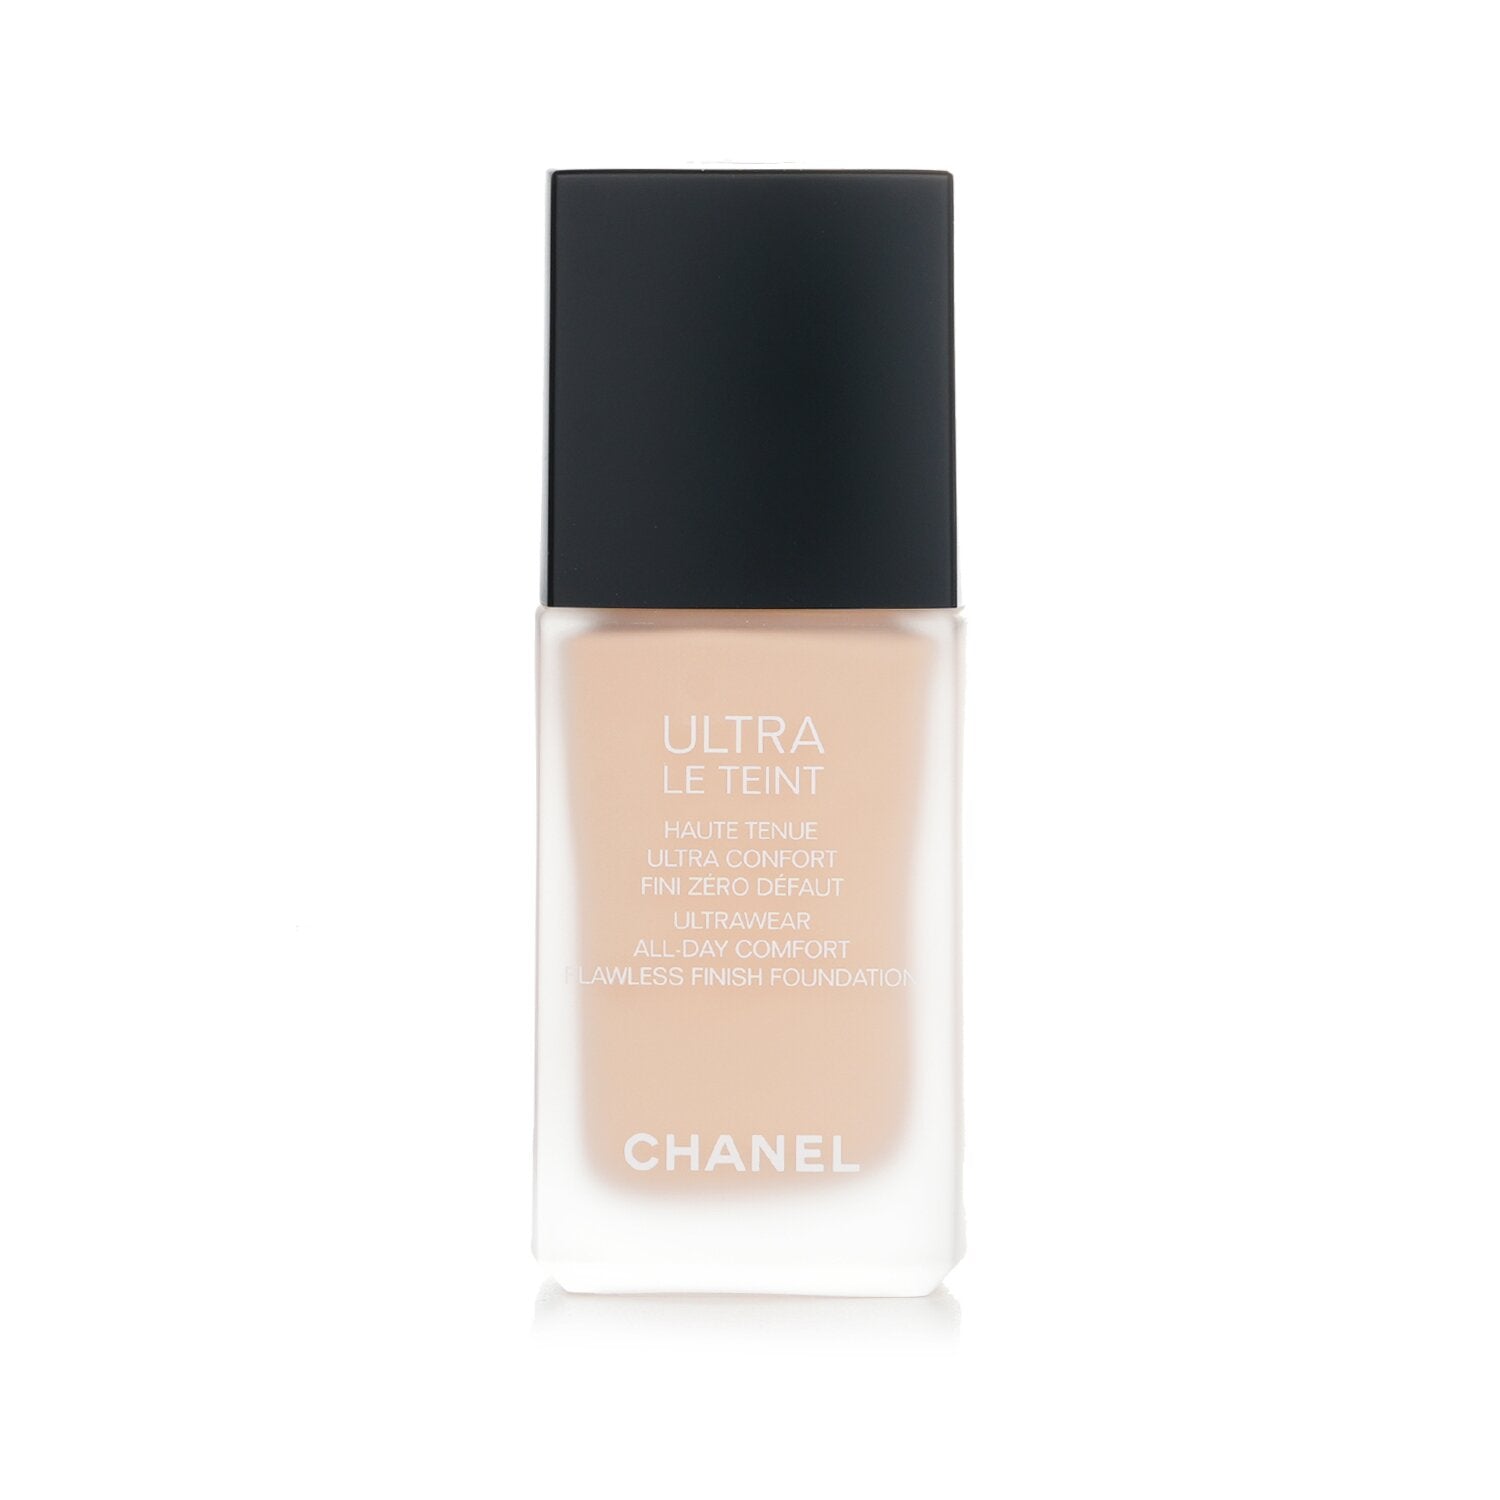 CC cream Chanel Complete Correction SPF50 trang điểm sáng đều màu da #20  Beige, 30ml (unbox)